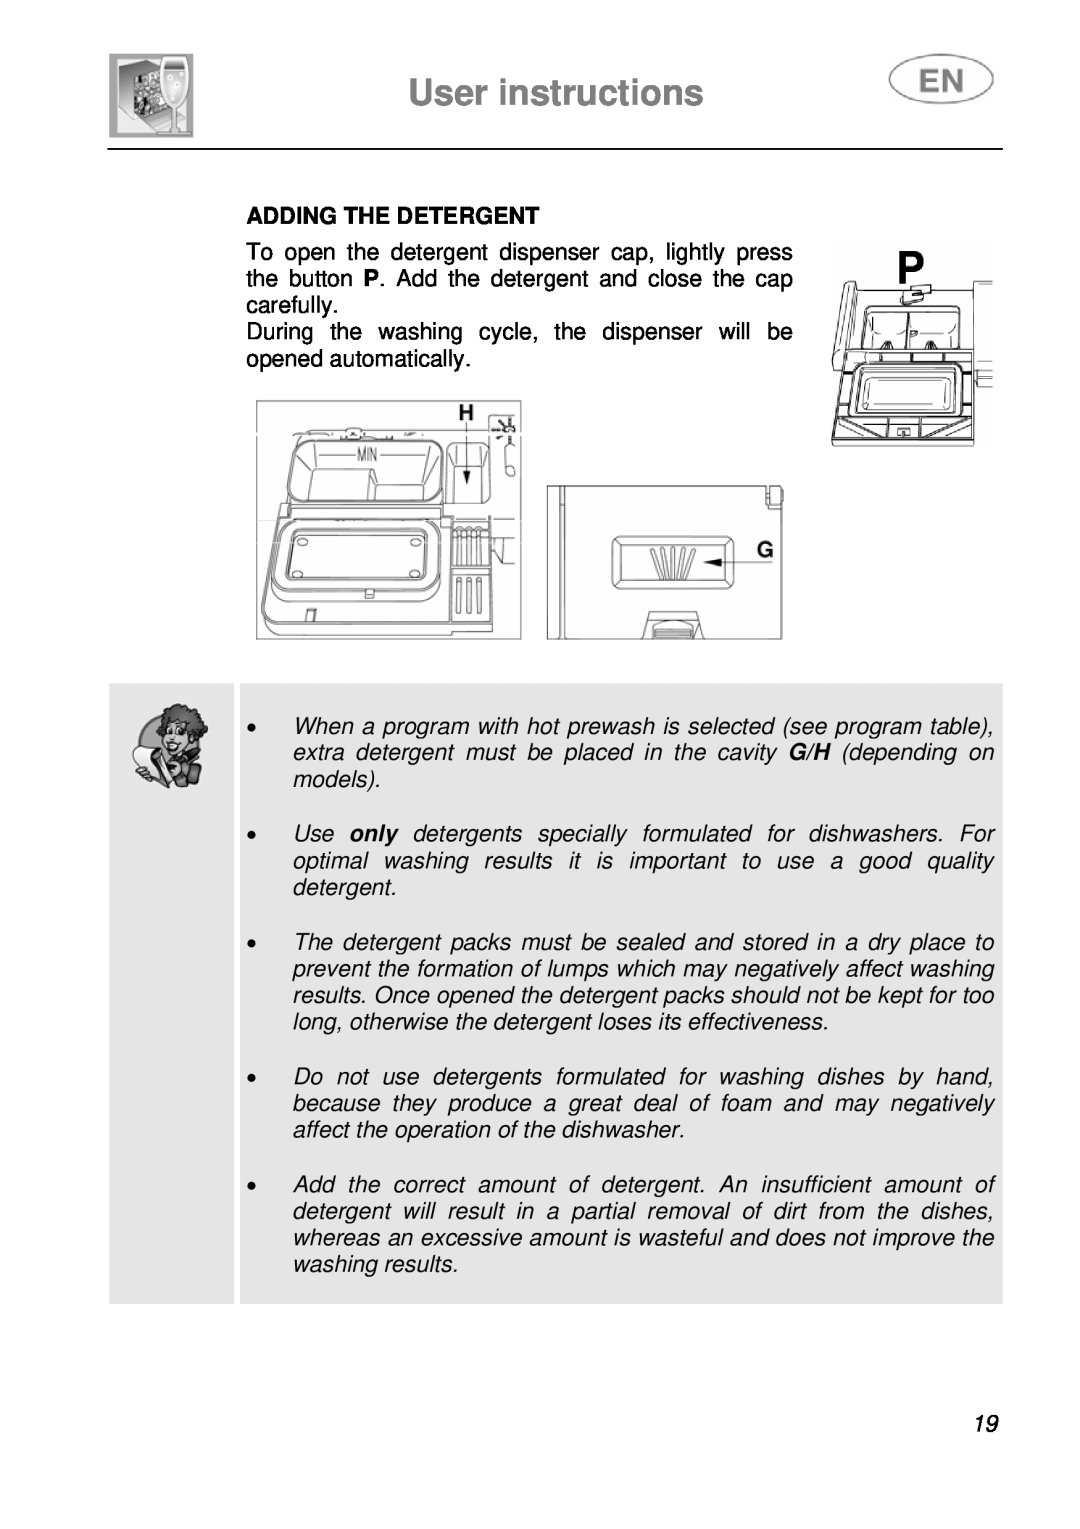 Smeg LVF649B instruction manual User instructions, Adding The Detergent 